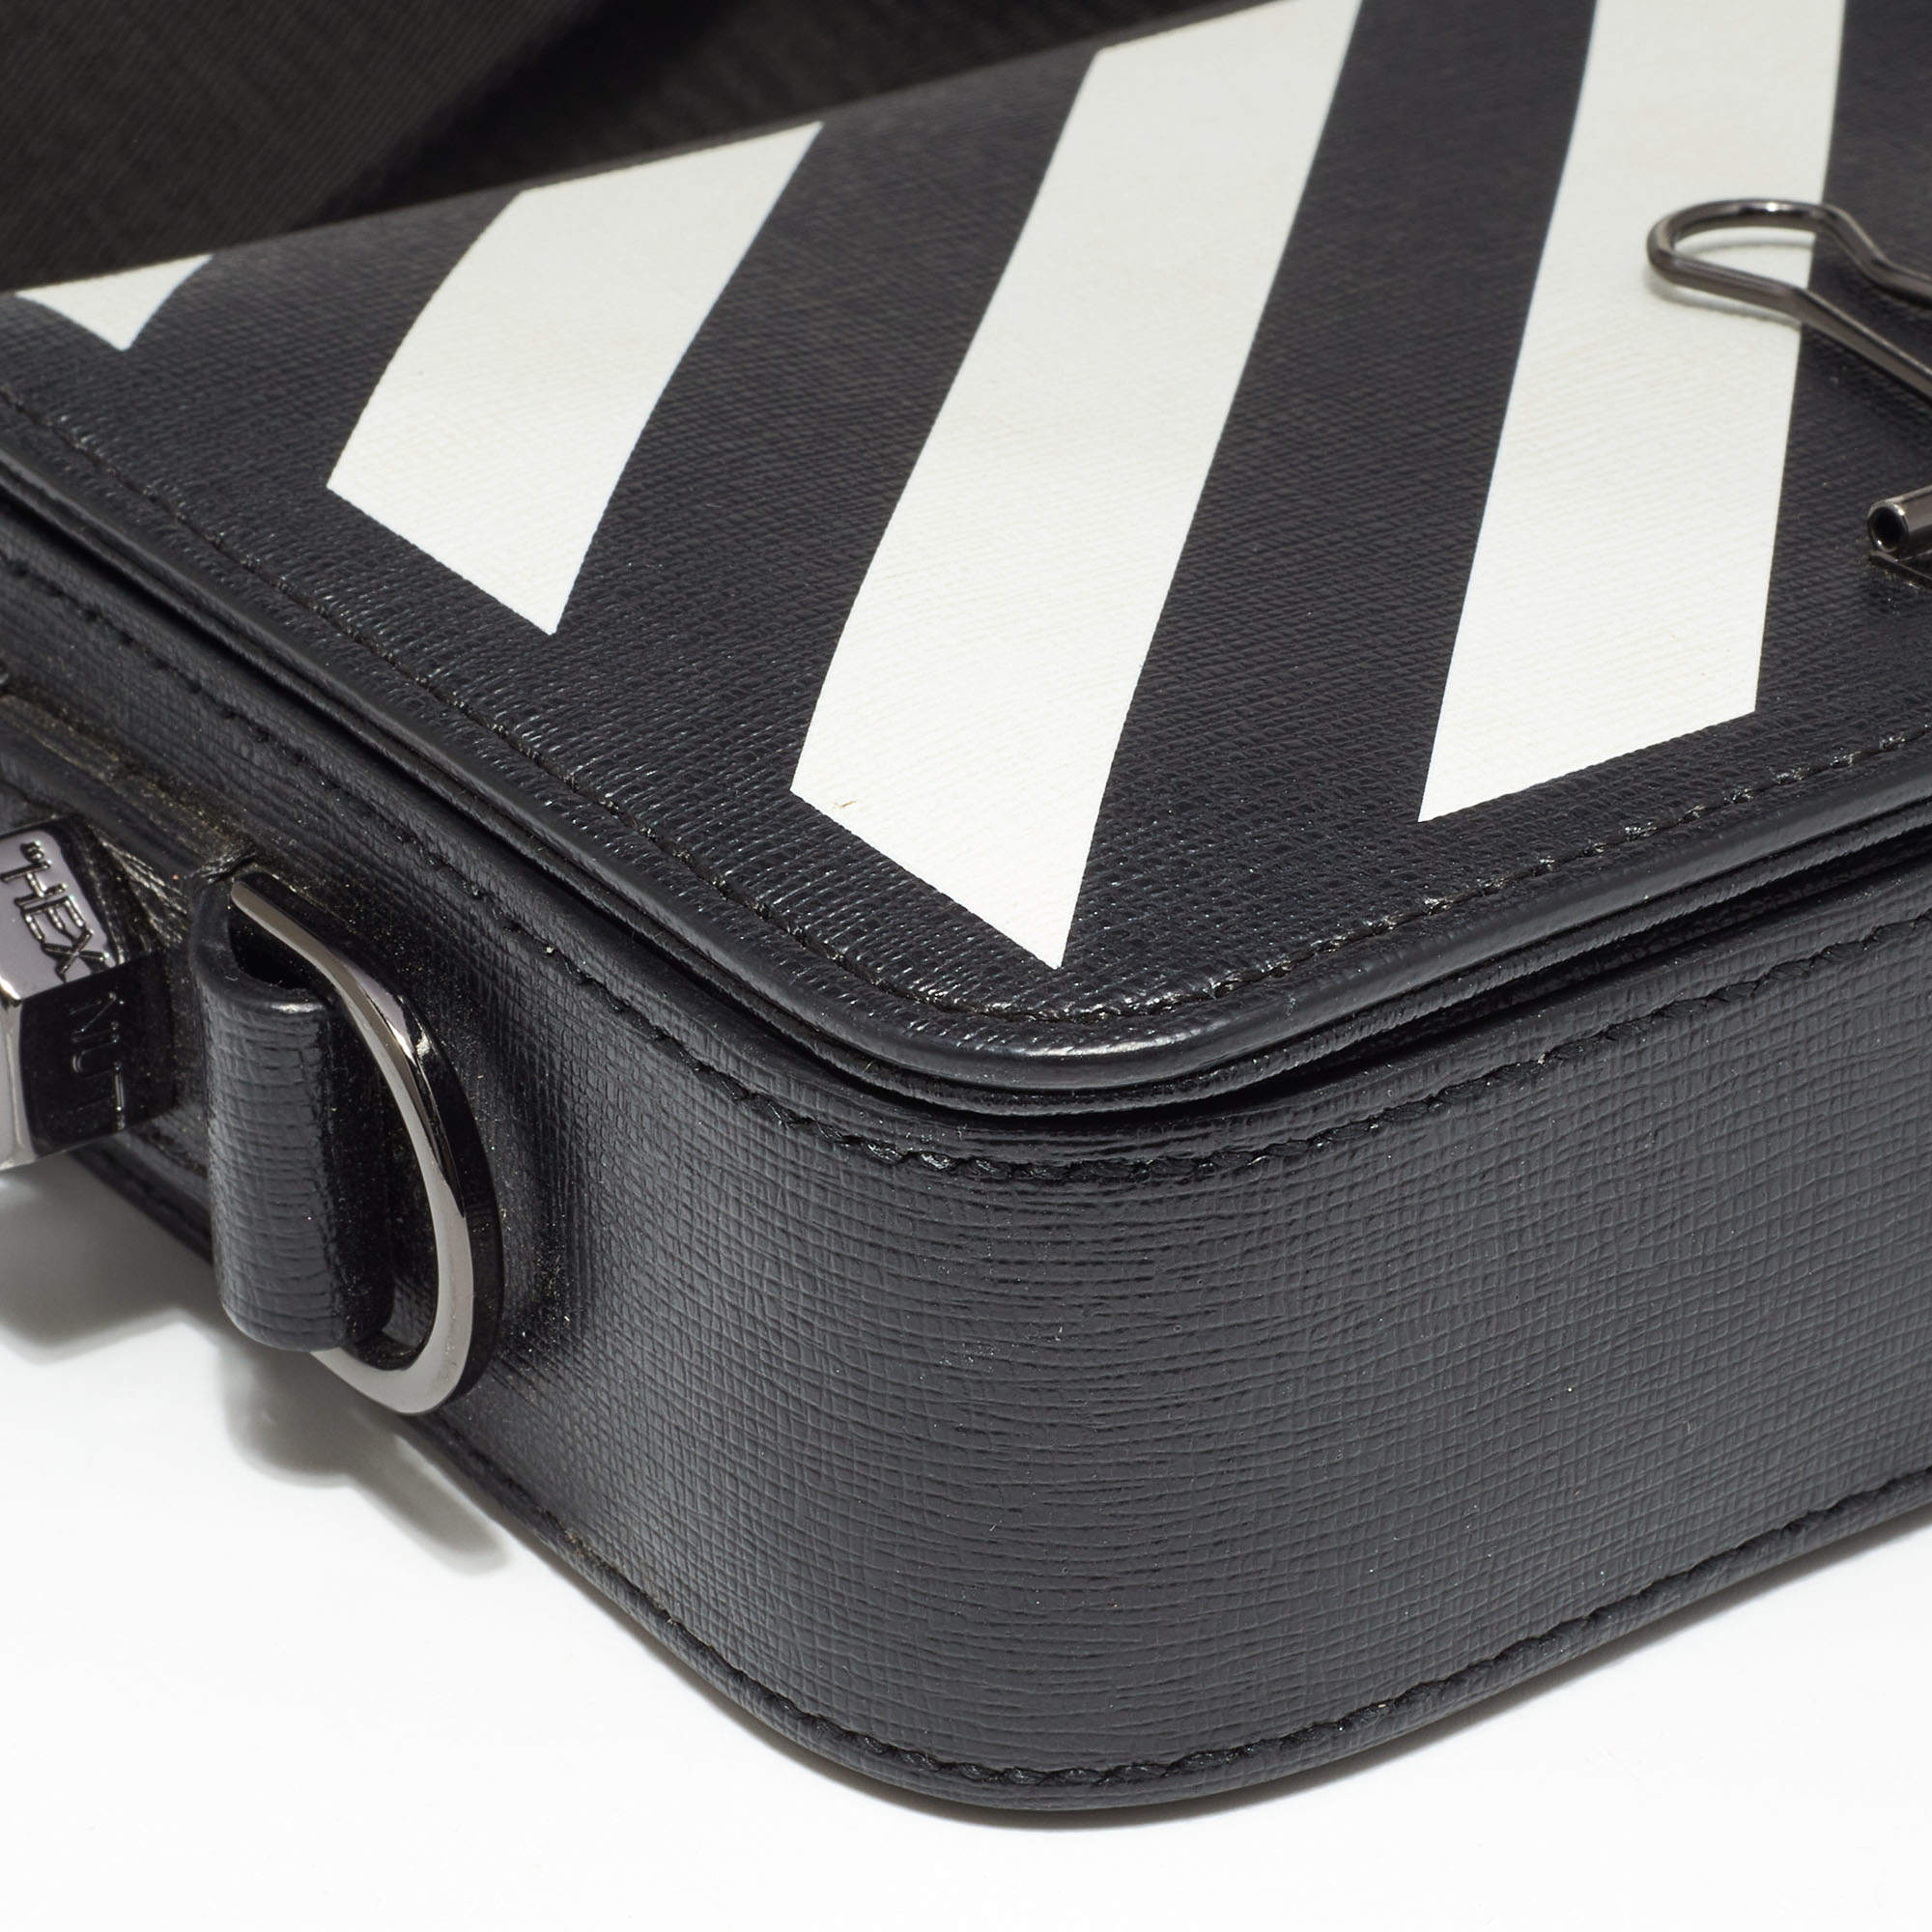 Off-White Diagonals Binder Clip Bag - Black Crossbody Bags, Handbags -  OFFVA57066